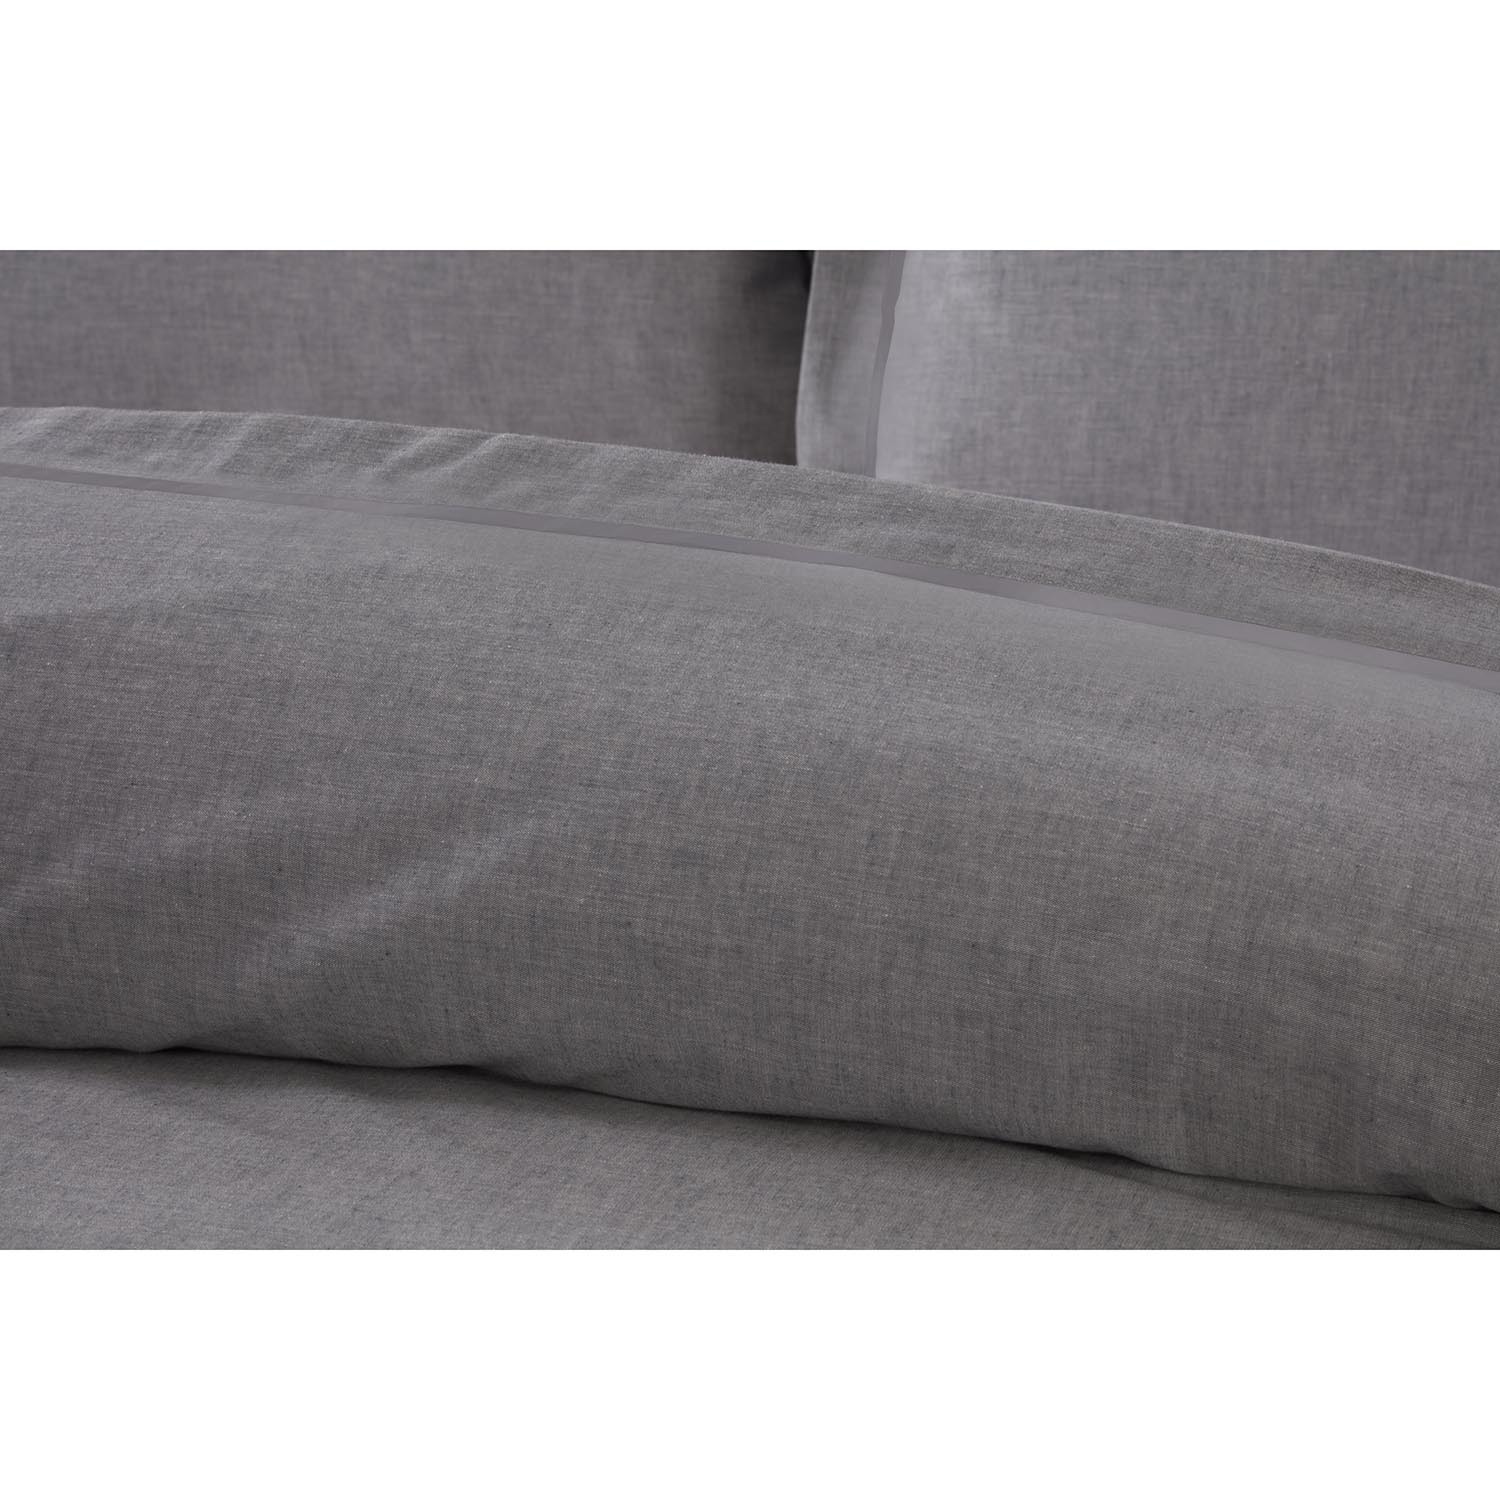 Josephine Oxford Edge Duvet Cover and Pillowcase Set - Double Image 4